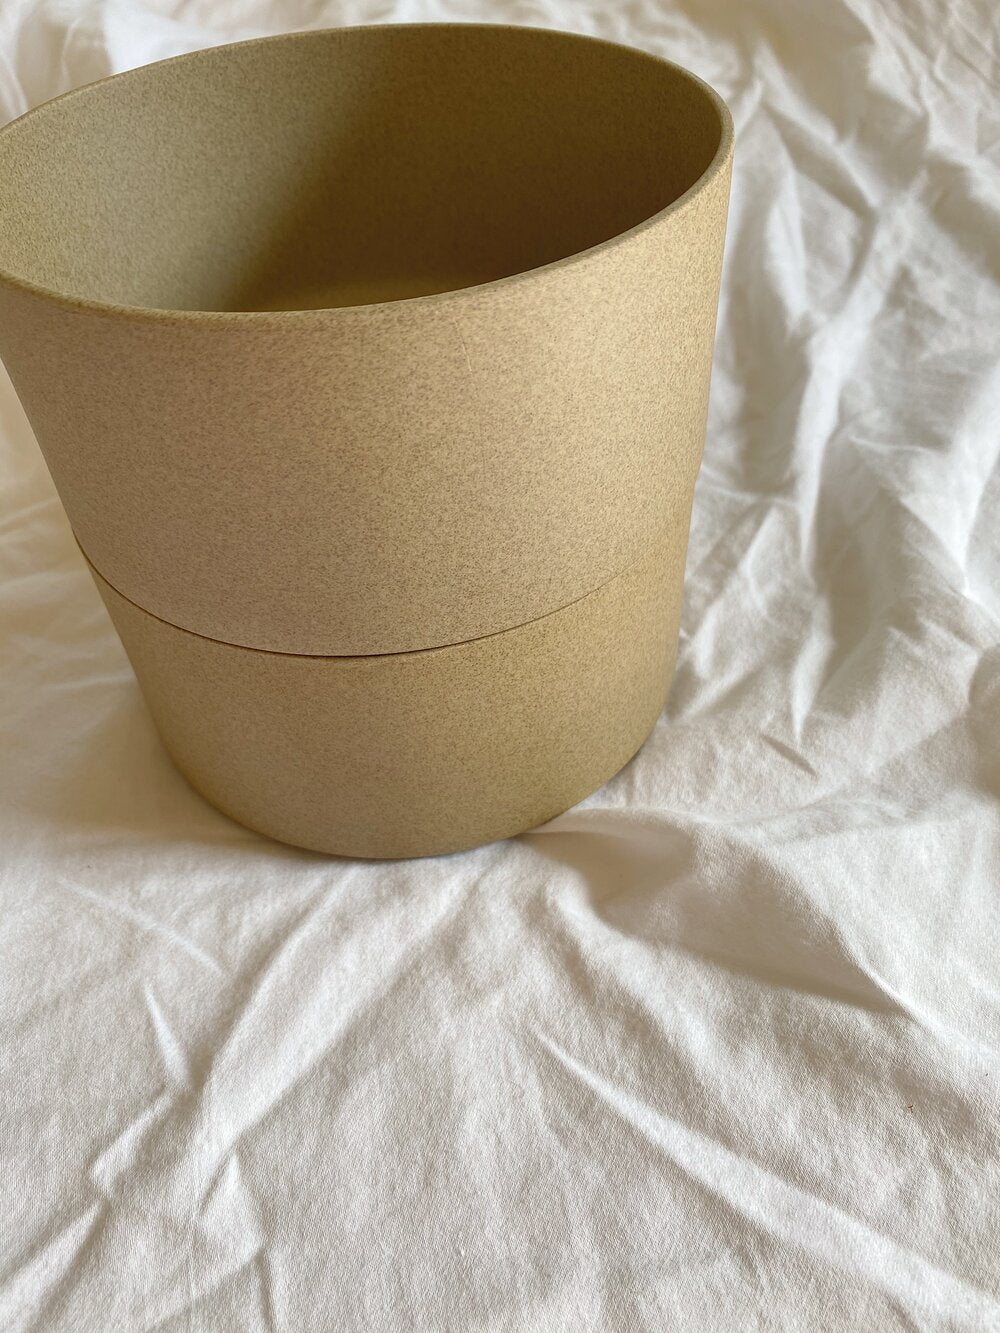 Hasami Porcelain Stackable Bowl in Natural